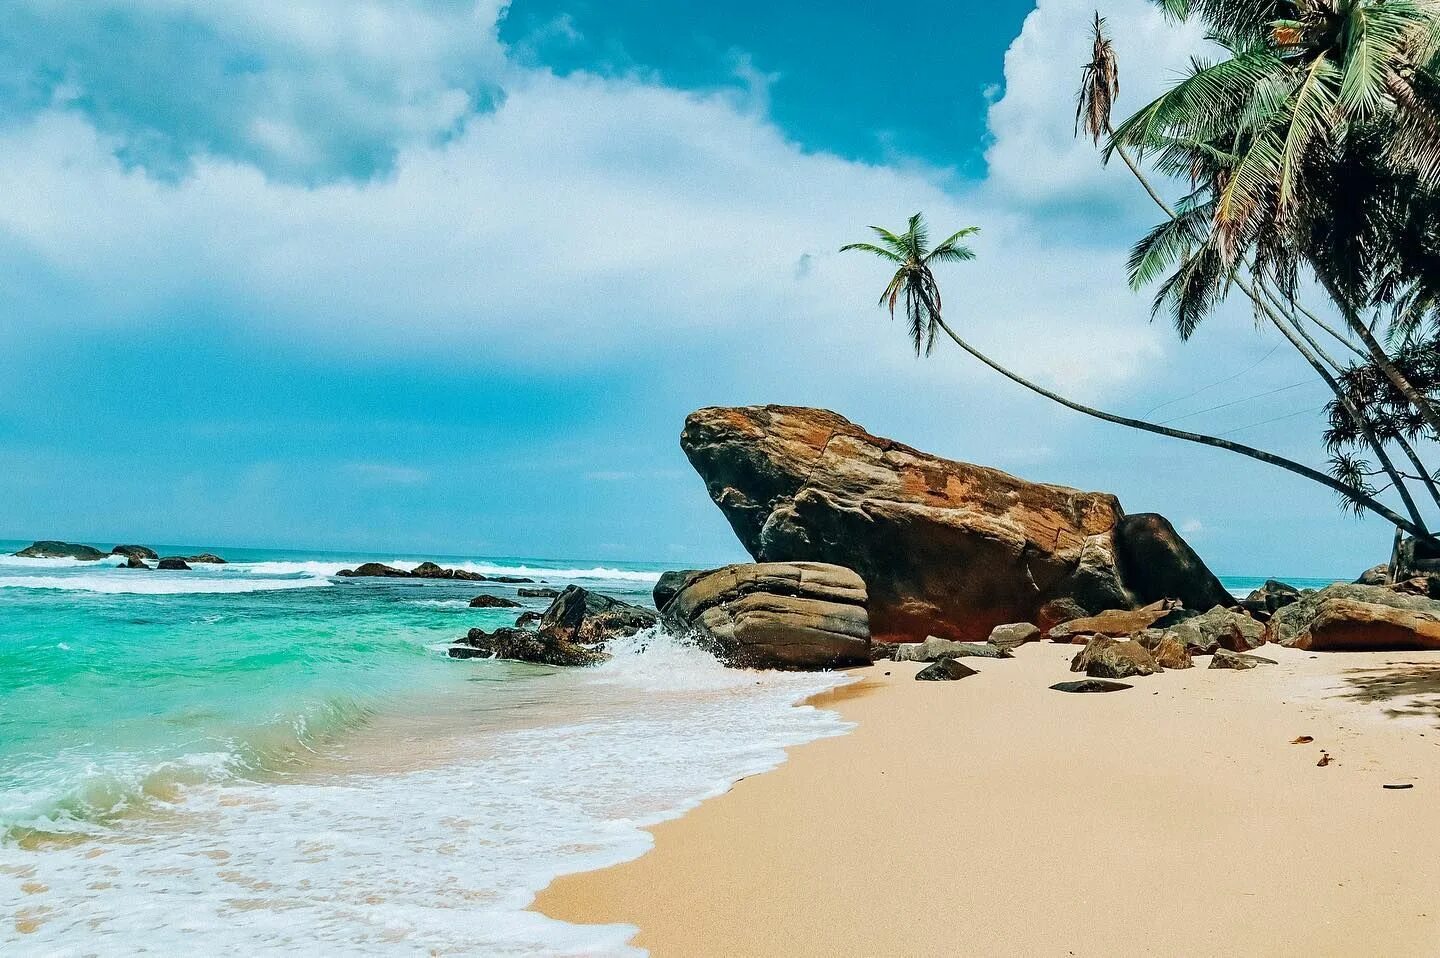 Шри ланка какие пляжи. Далавелла Шри Ланка. Пляж Далавелла Шри-Ланка. Унаватуна Шри Ланка. Далауэла Бич Шри Ланка.